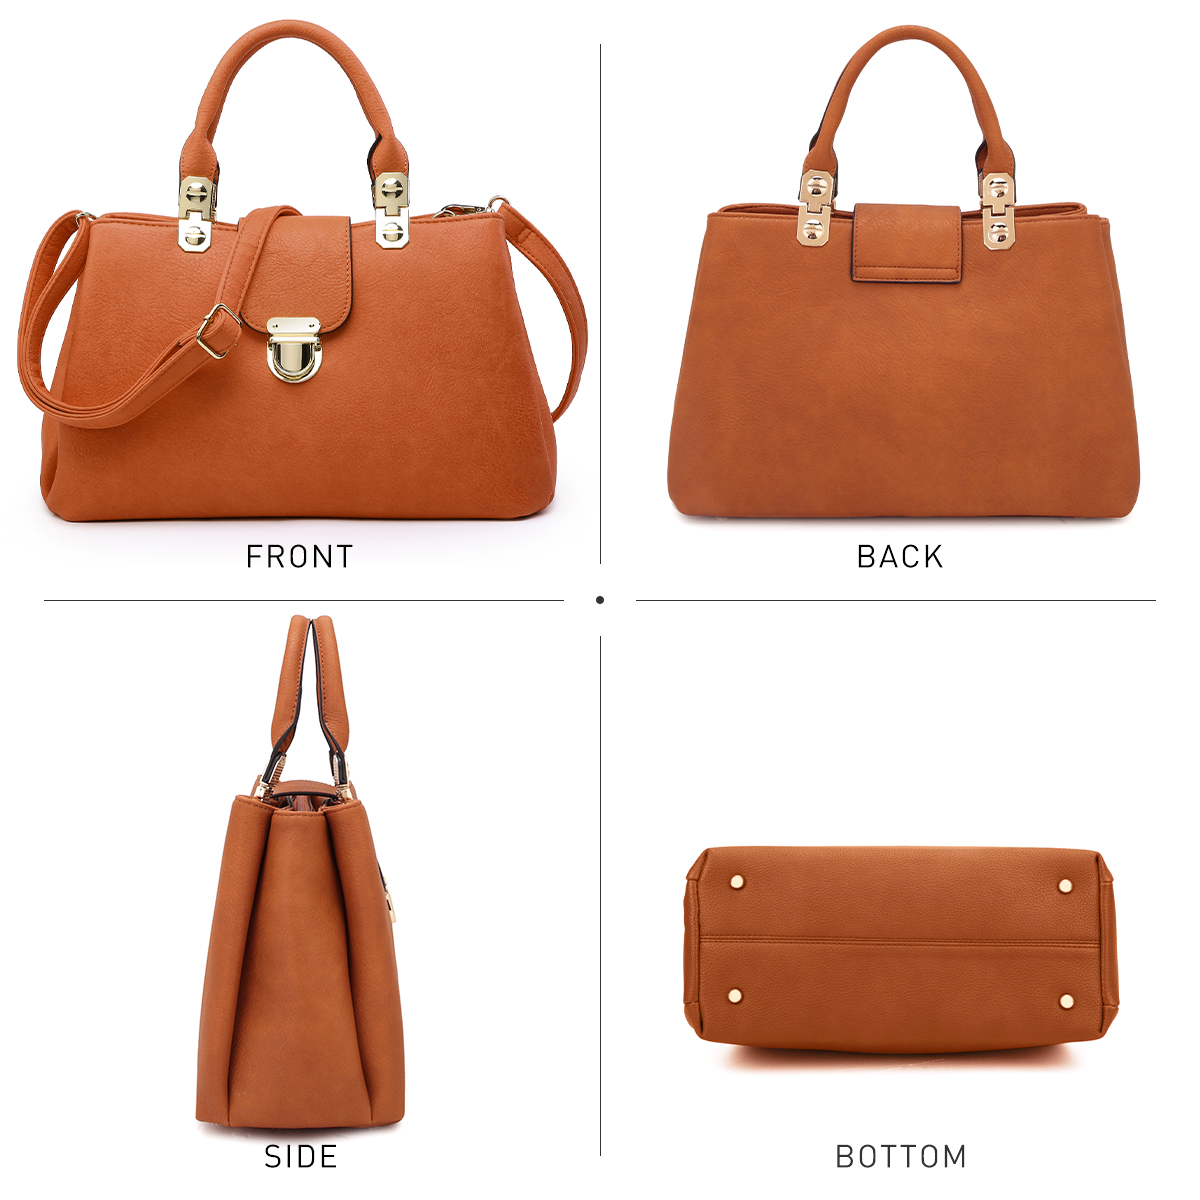 Dasein Women Satchel Handbags Top Handle Purse Medium Tote Bag Vegan Leather Shoulder Bag - image 5 of 6